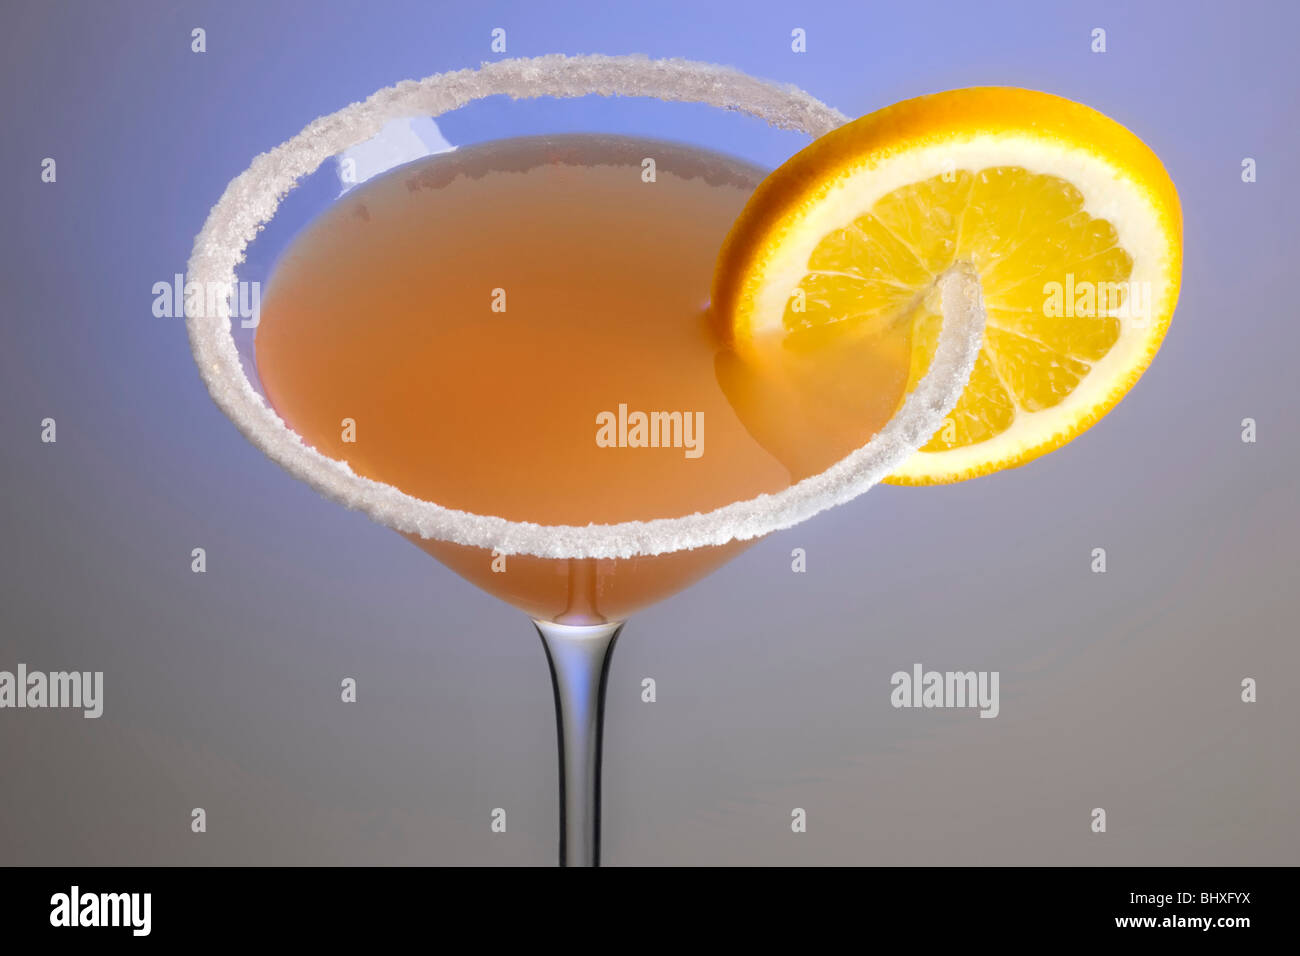 Sidecar mixed drink with orange garnish and sugar rim on plain background close up Stock Photo